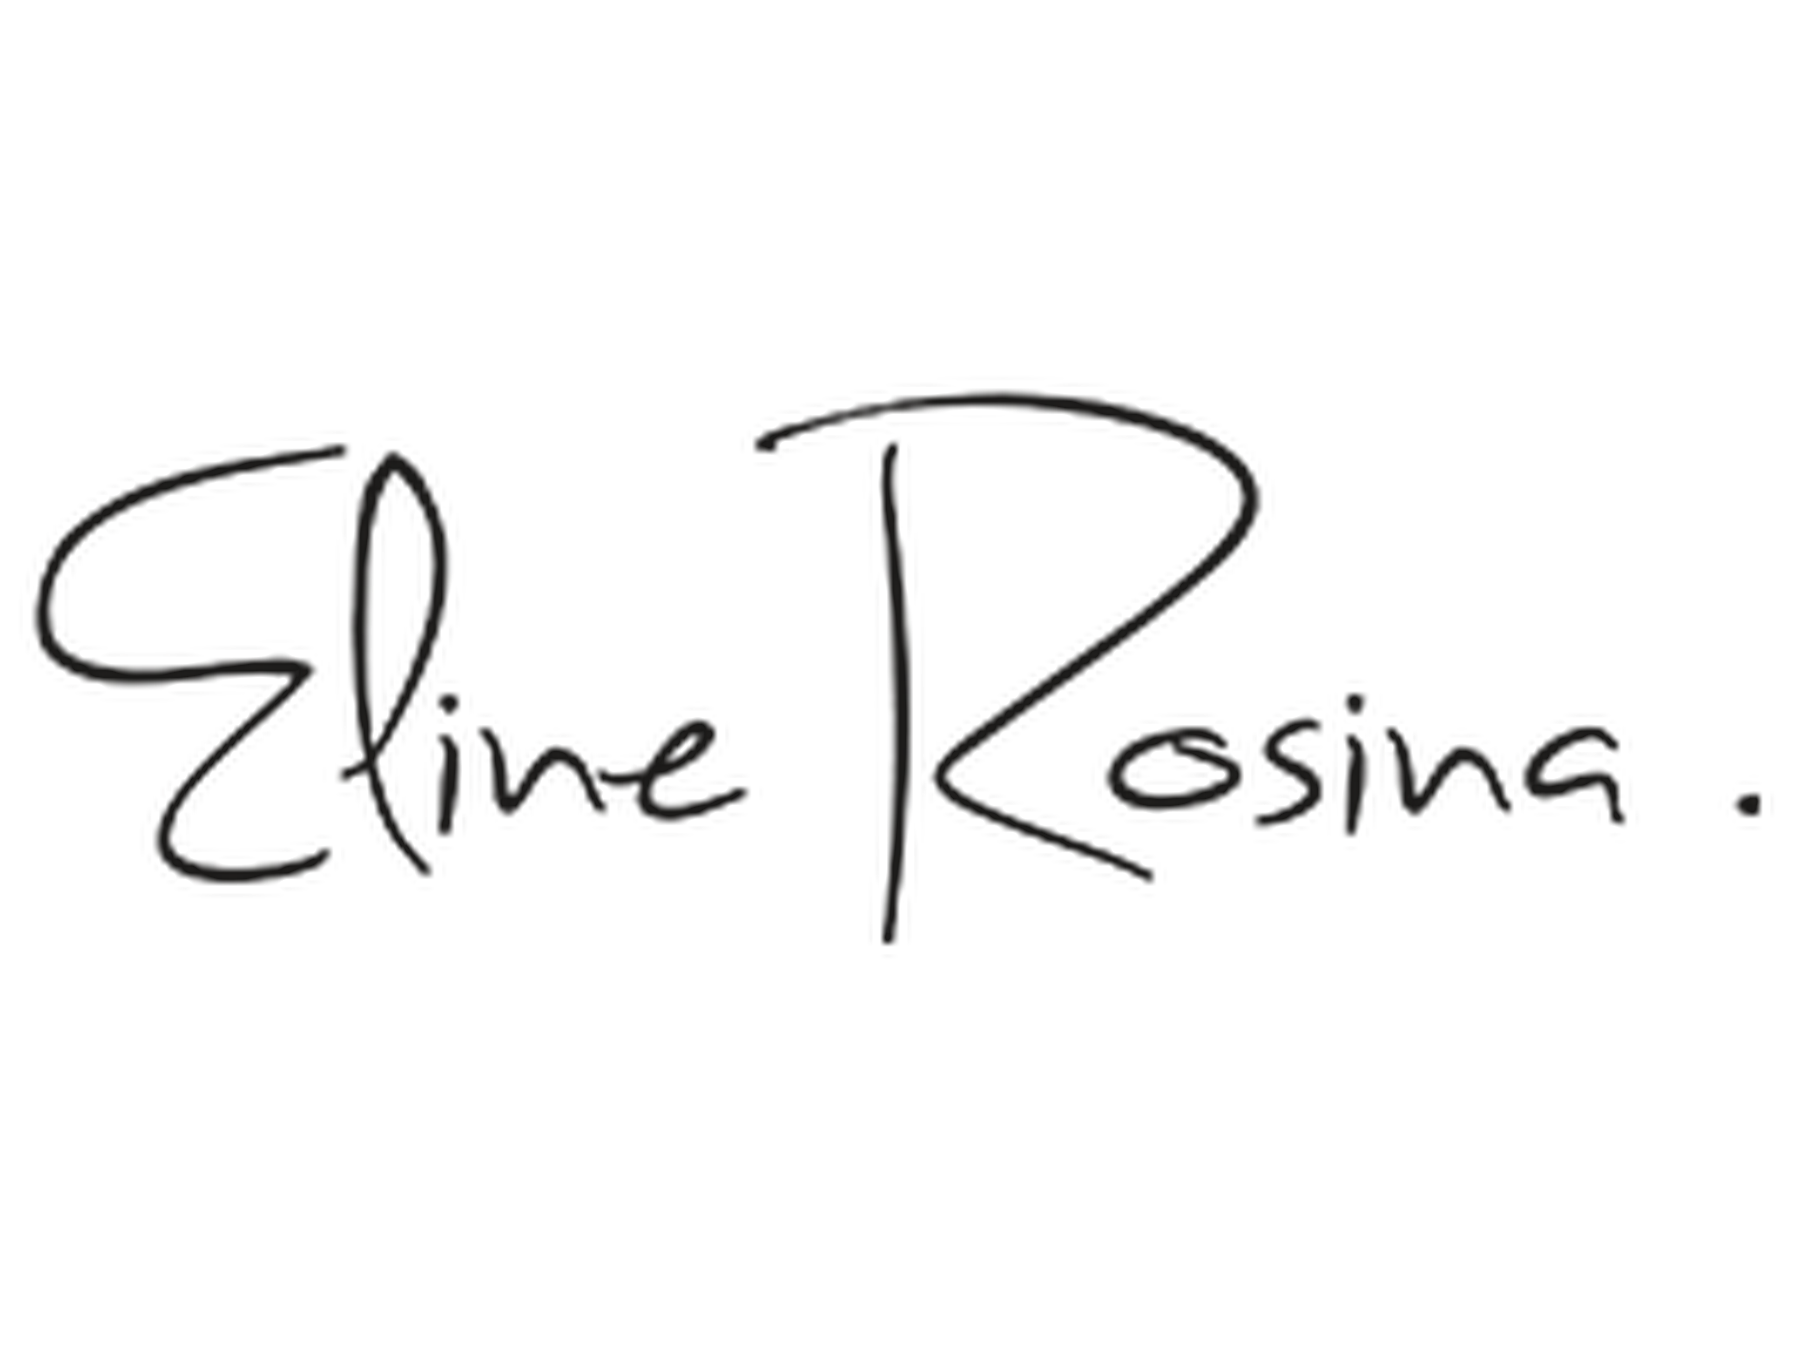 Eline Rosina kortingscode